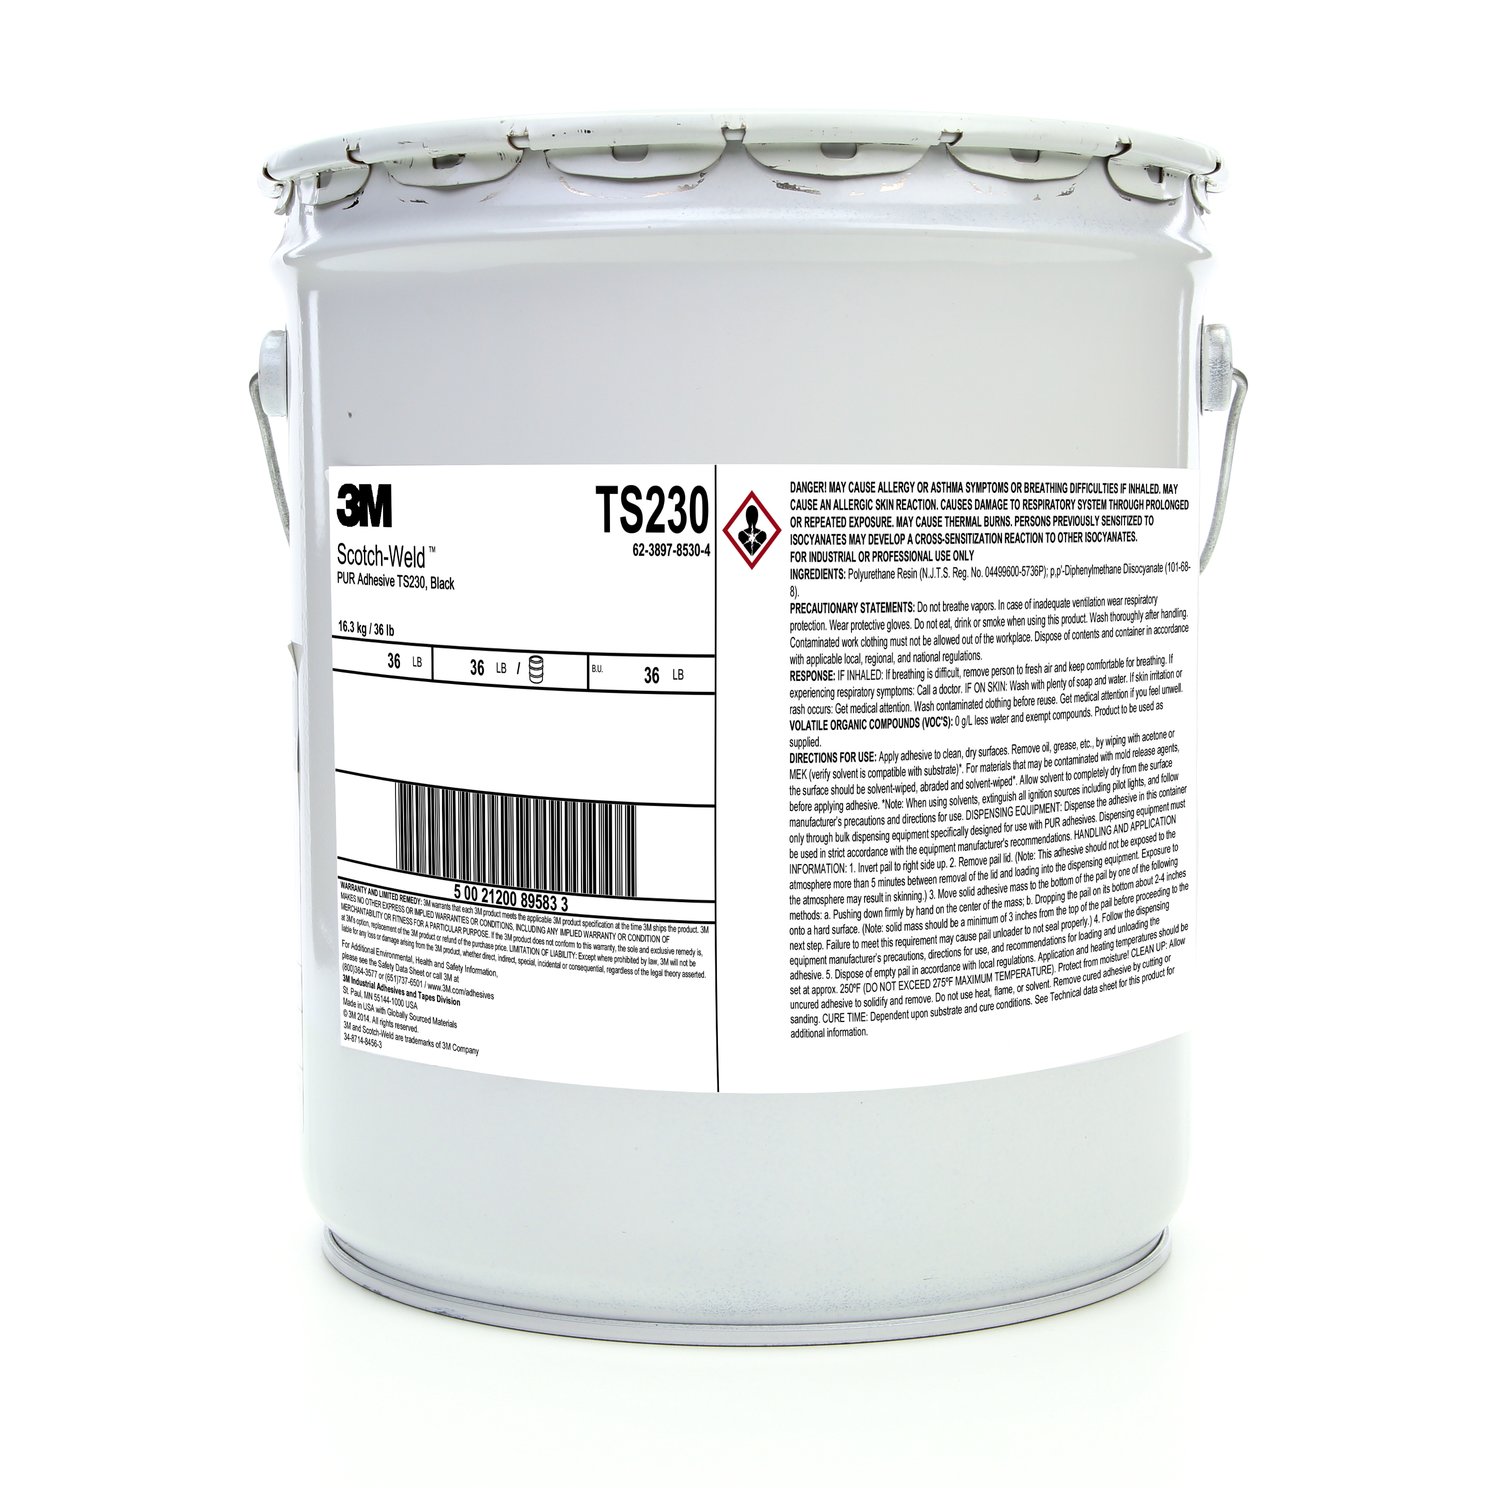 7000121361 - 3M Scotch-Weld PUR Adhesive TS230, Black, 5 Gallon Drum (36 lb),
1/Drum